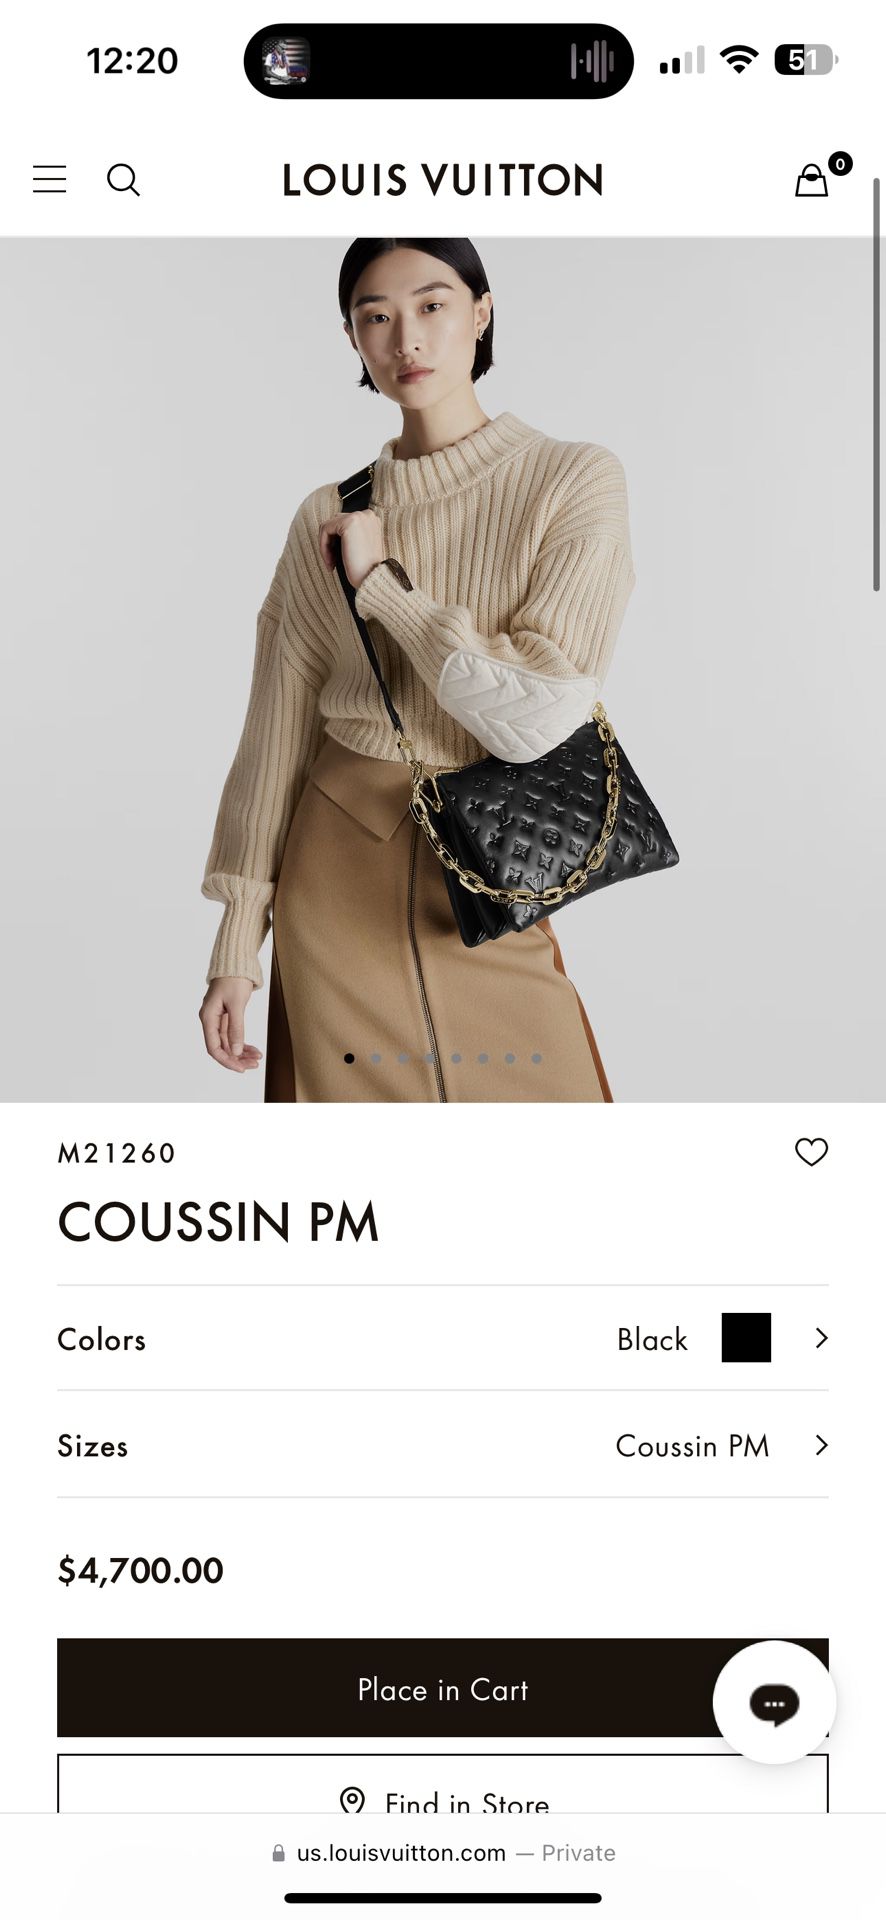 Louis Vuitton Coussin PM Black – Now You Glow